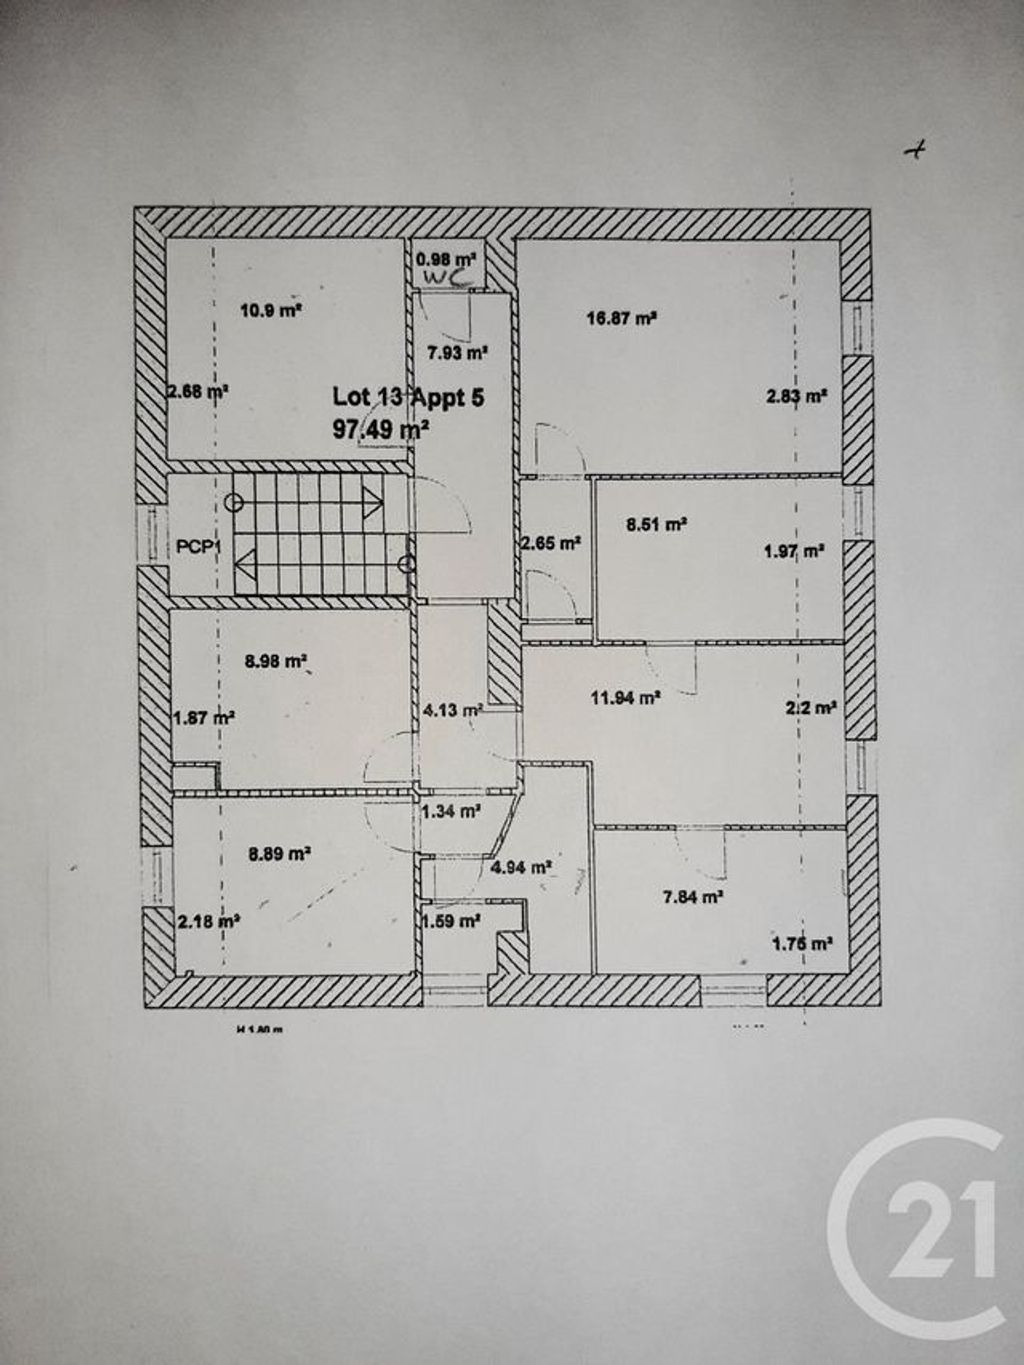 Achat appartement 5 pièces 97 m² - Belfort